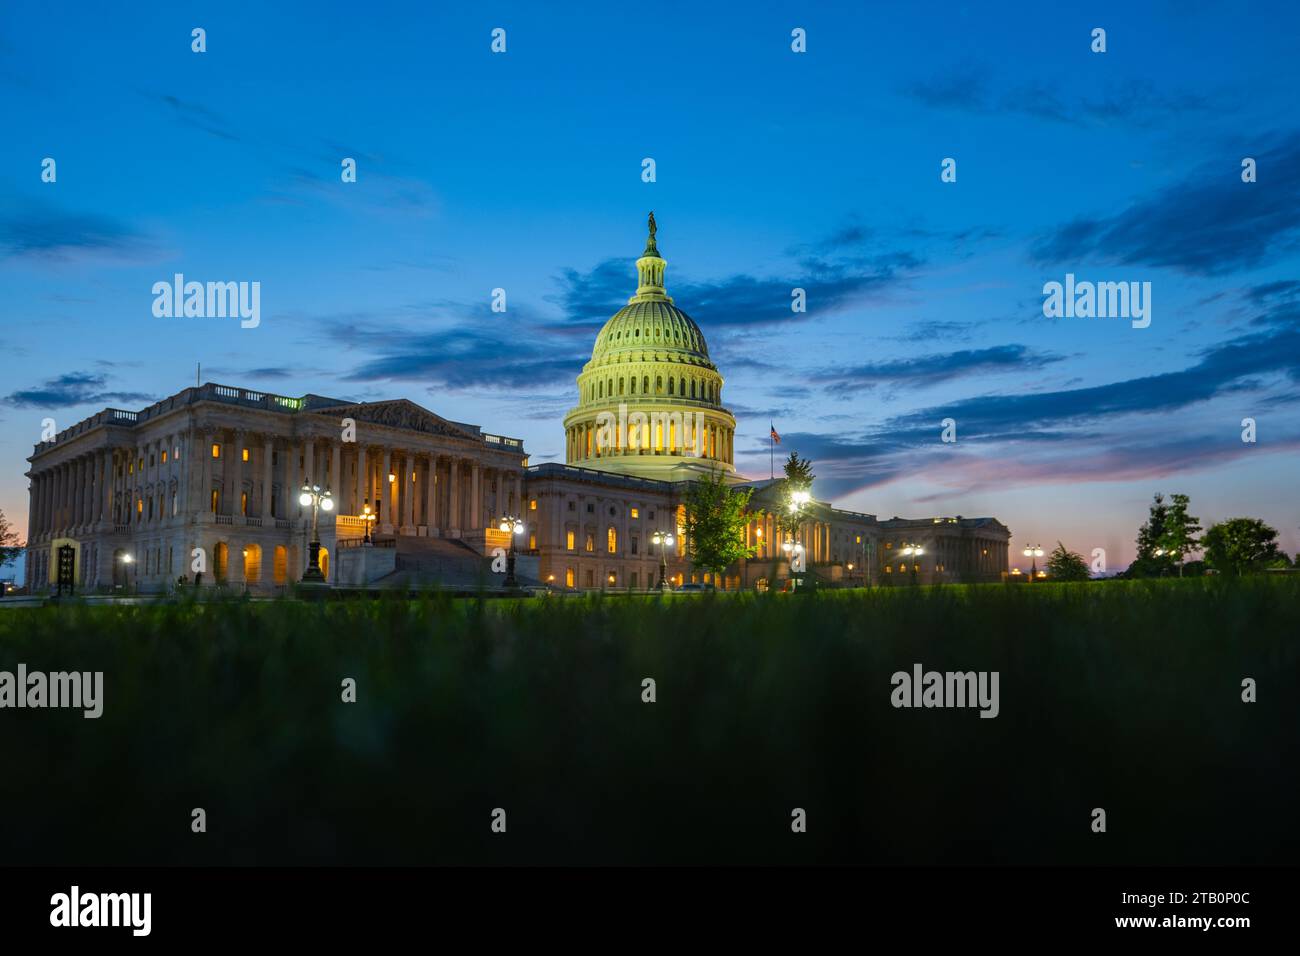 Washington DC. Capitol building. USA Congress, Washington D.C. Grass, park, night shoot. Stock Photo